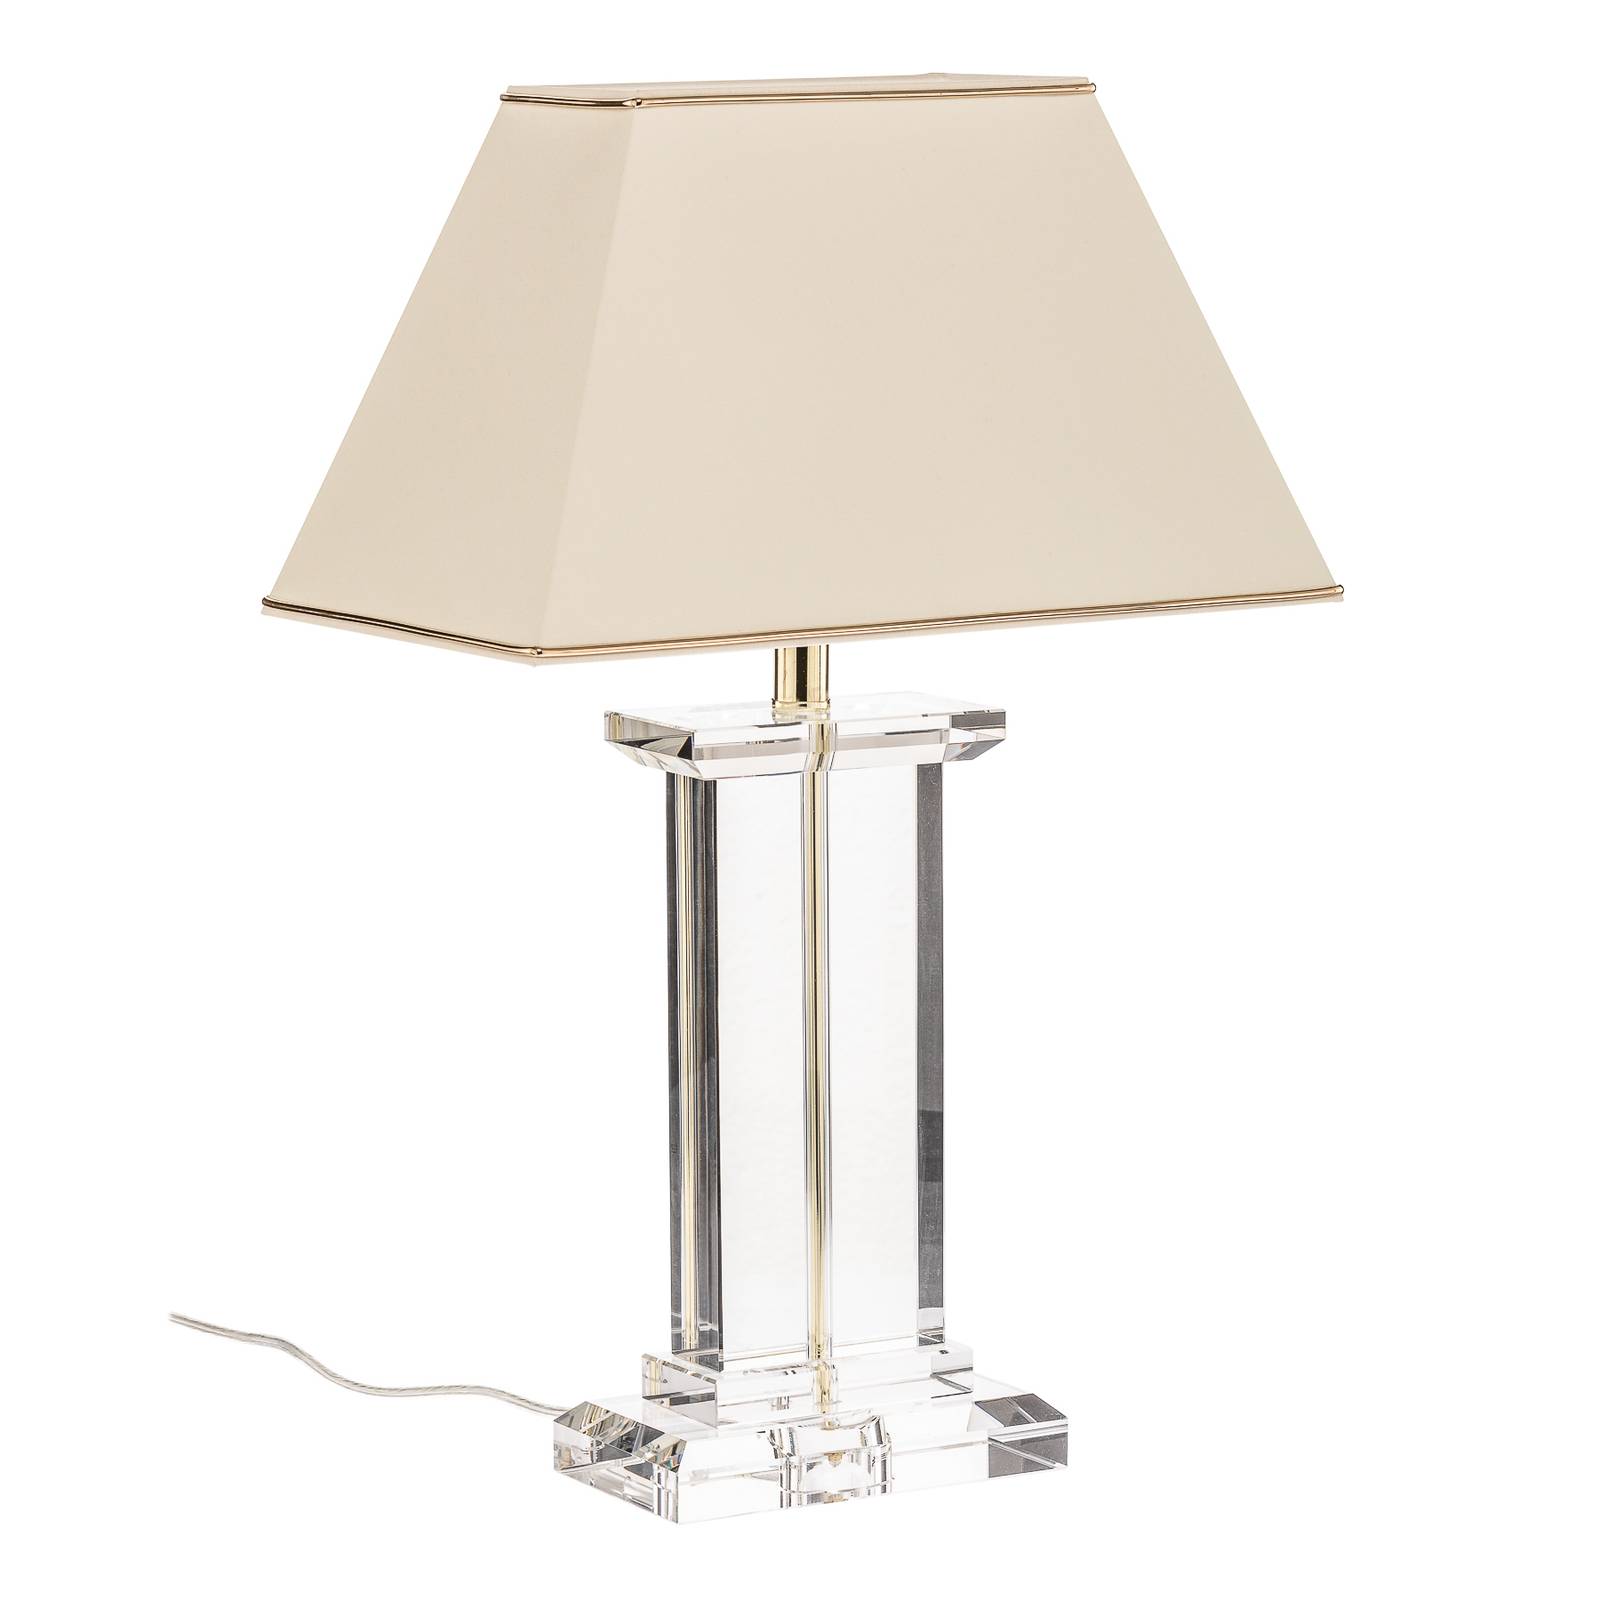 Veronique table lamp, wide base, cream/gold